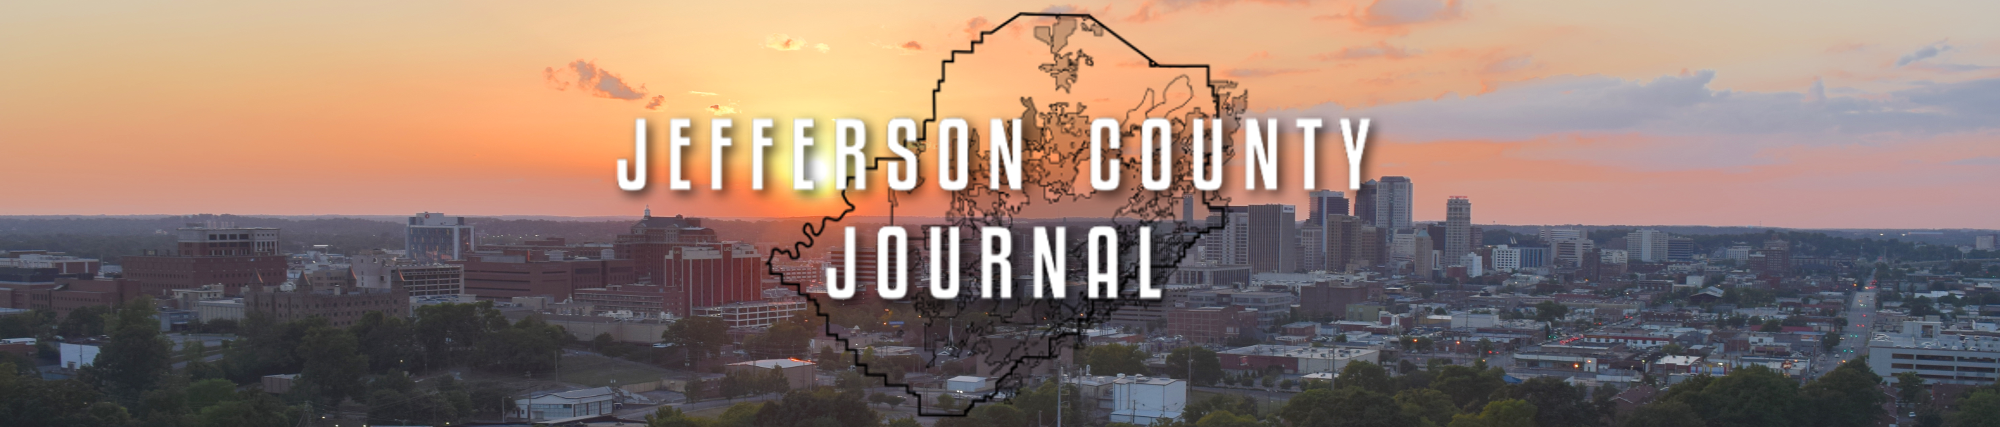 Jefferson County Journal